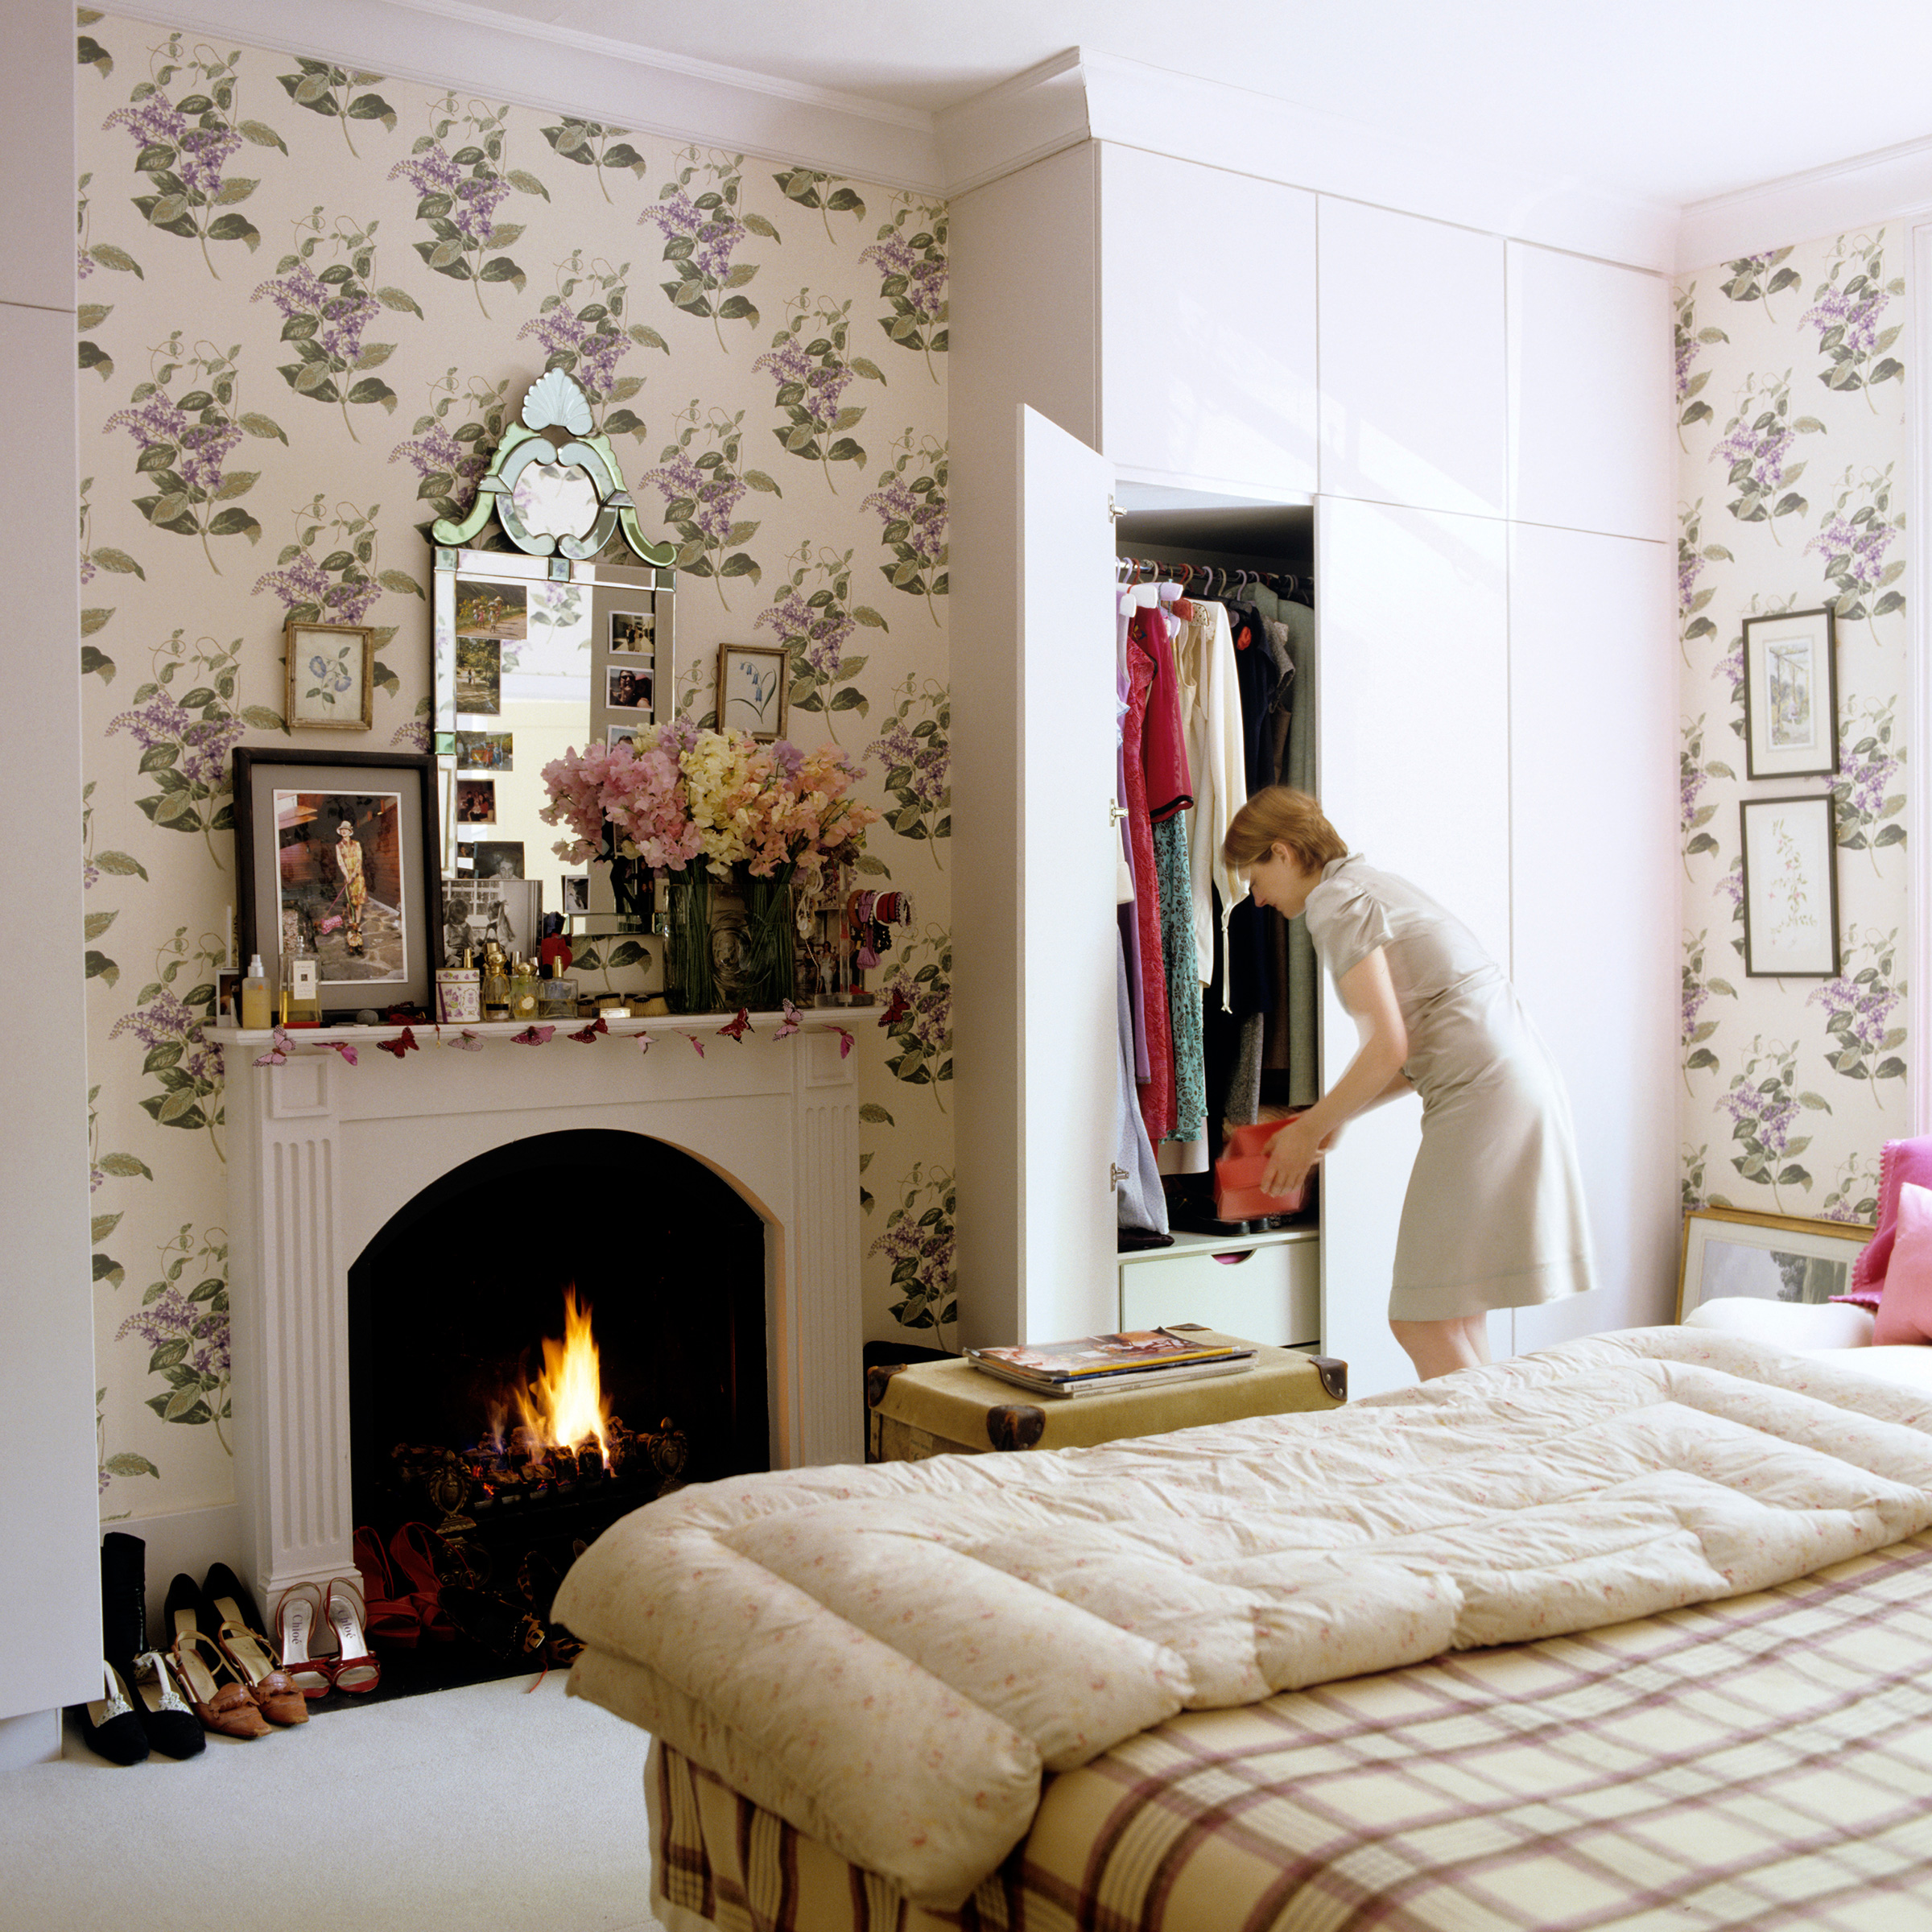 Cole and Son Wallpaper Madras Violet Rita Konig London Bedroom Plaid Throw Fireplace